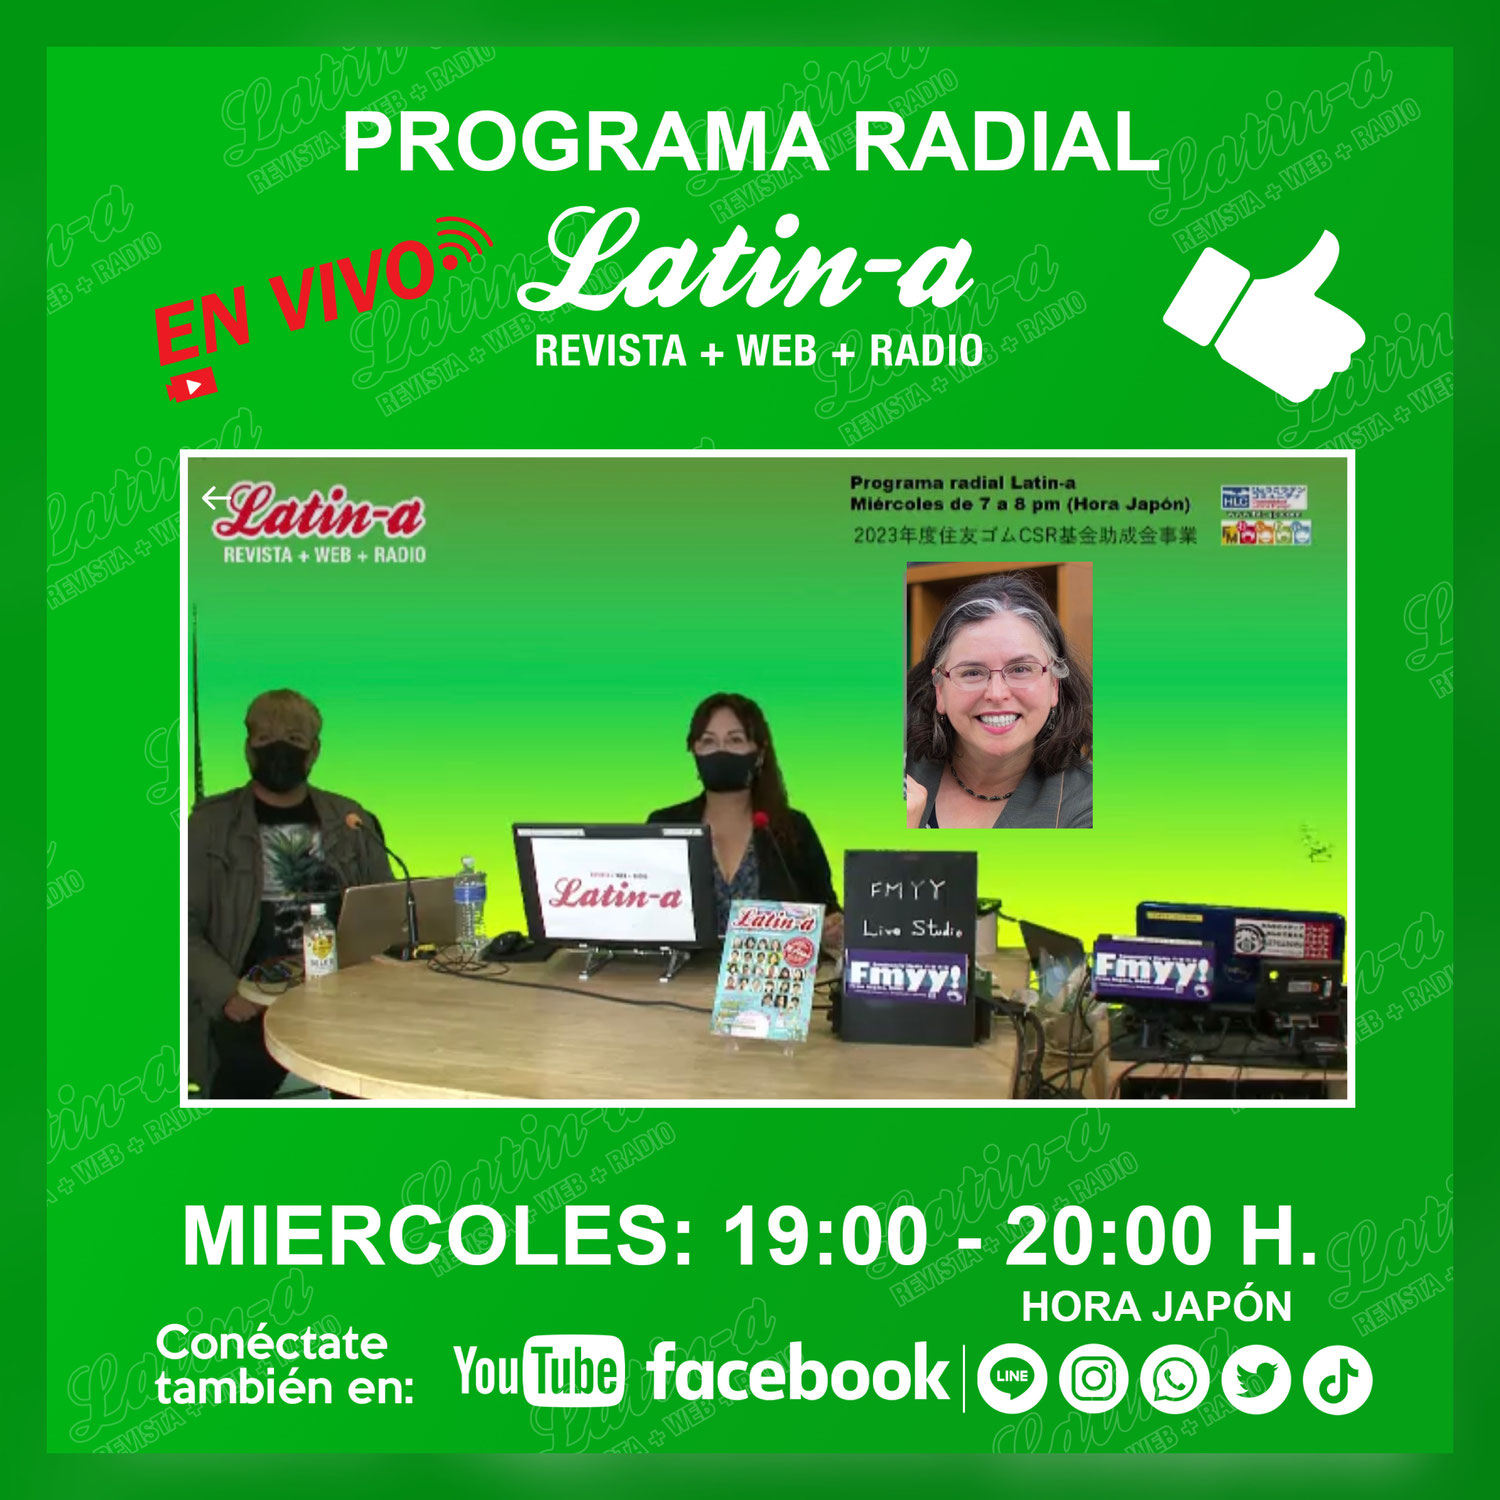 ◆◆Programa radial Latin-a / ラジオ番組ラティーナ◆◆